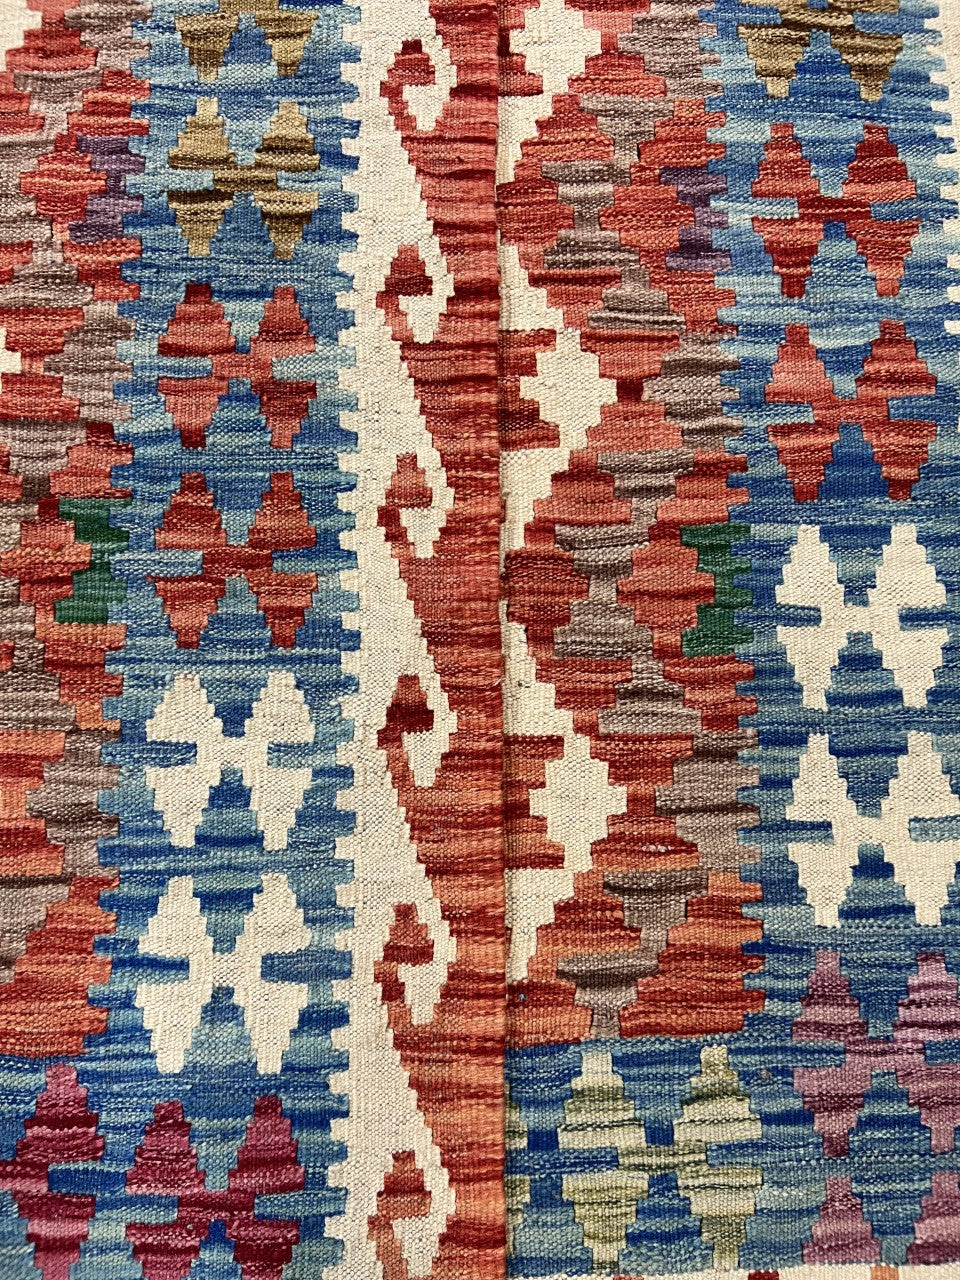 Wonderful Afghan Kilim new decorative rug